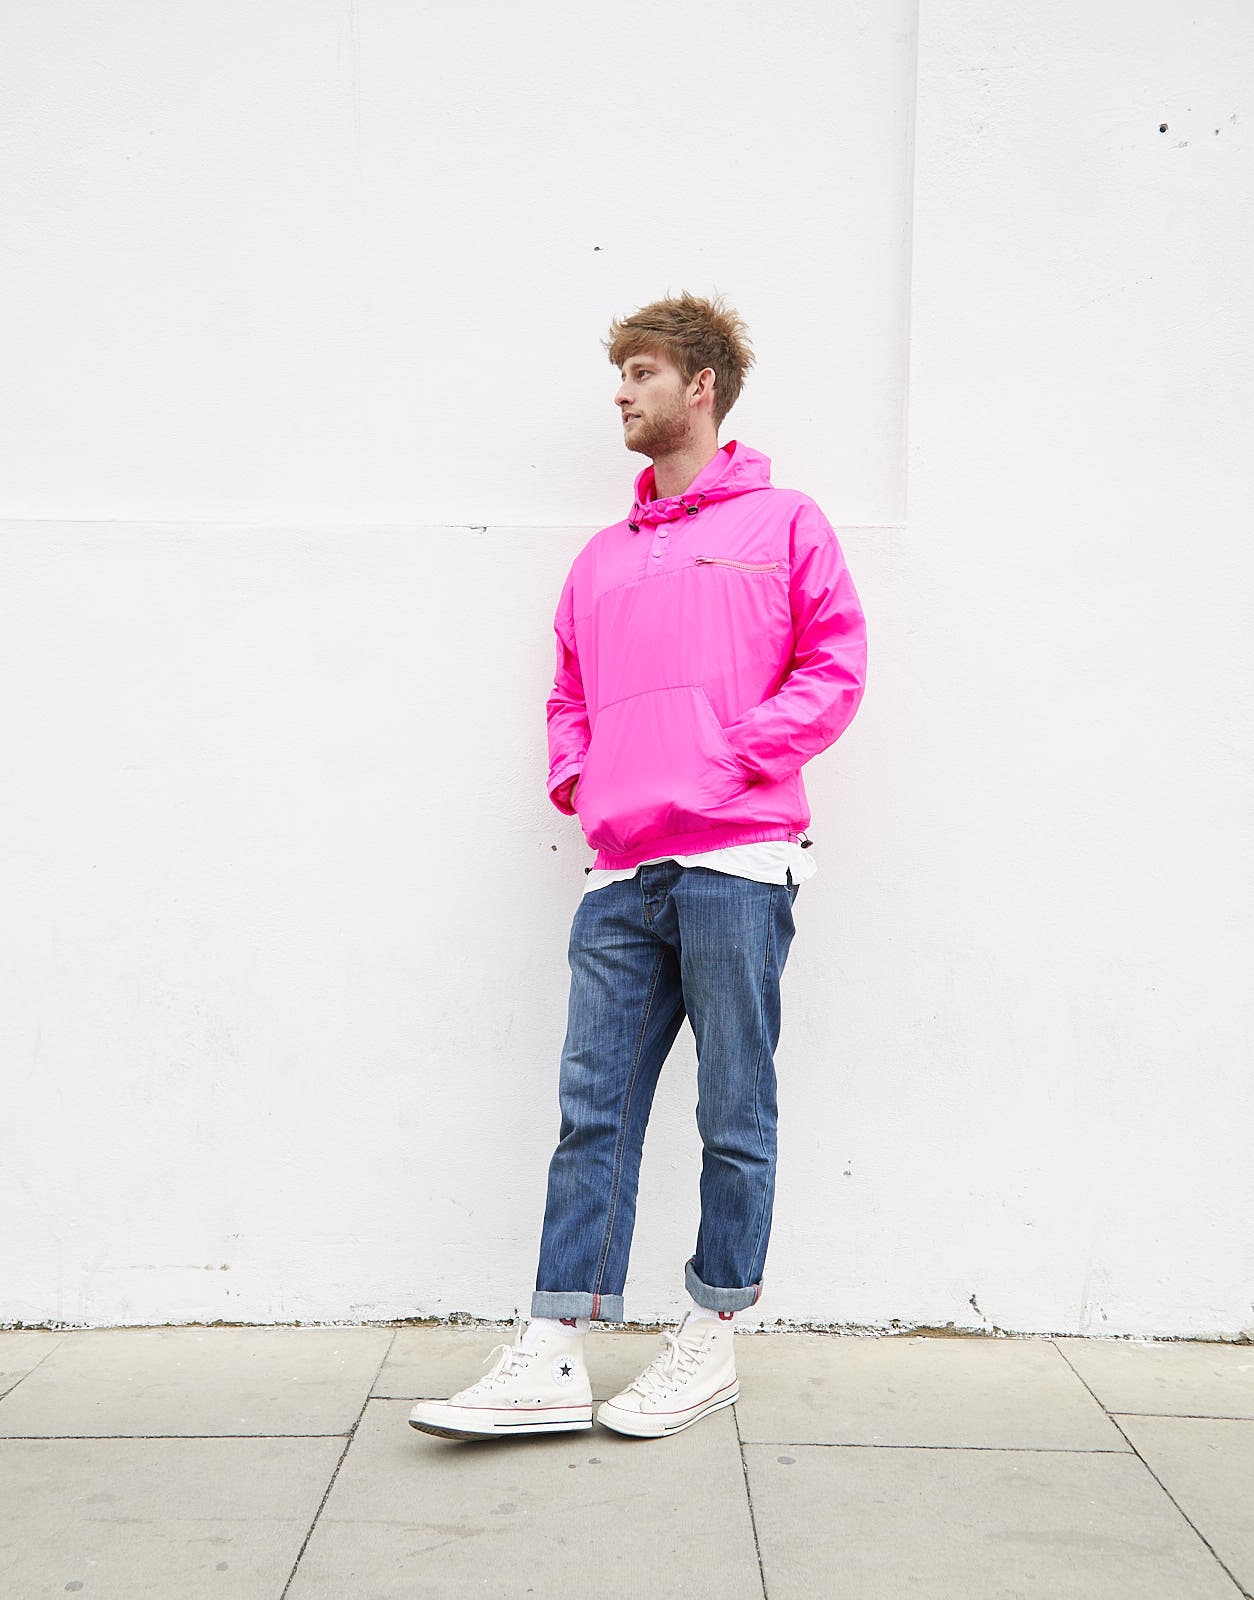 ASOS artworker Tom in a neon pink jacket